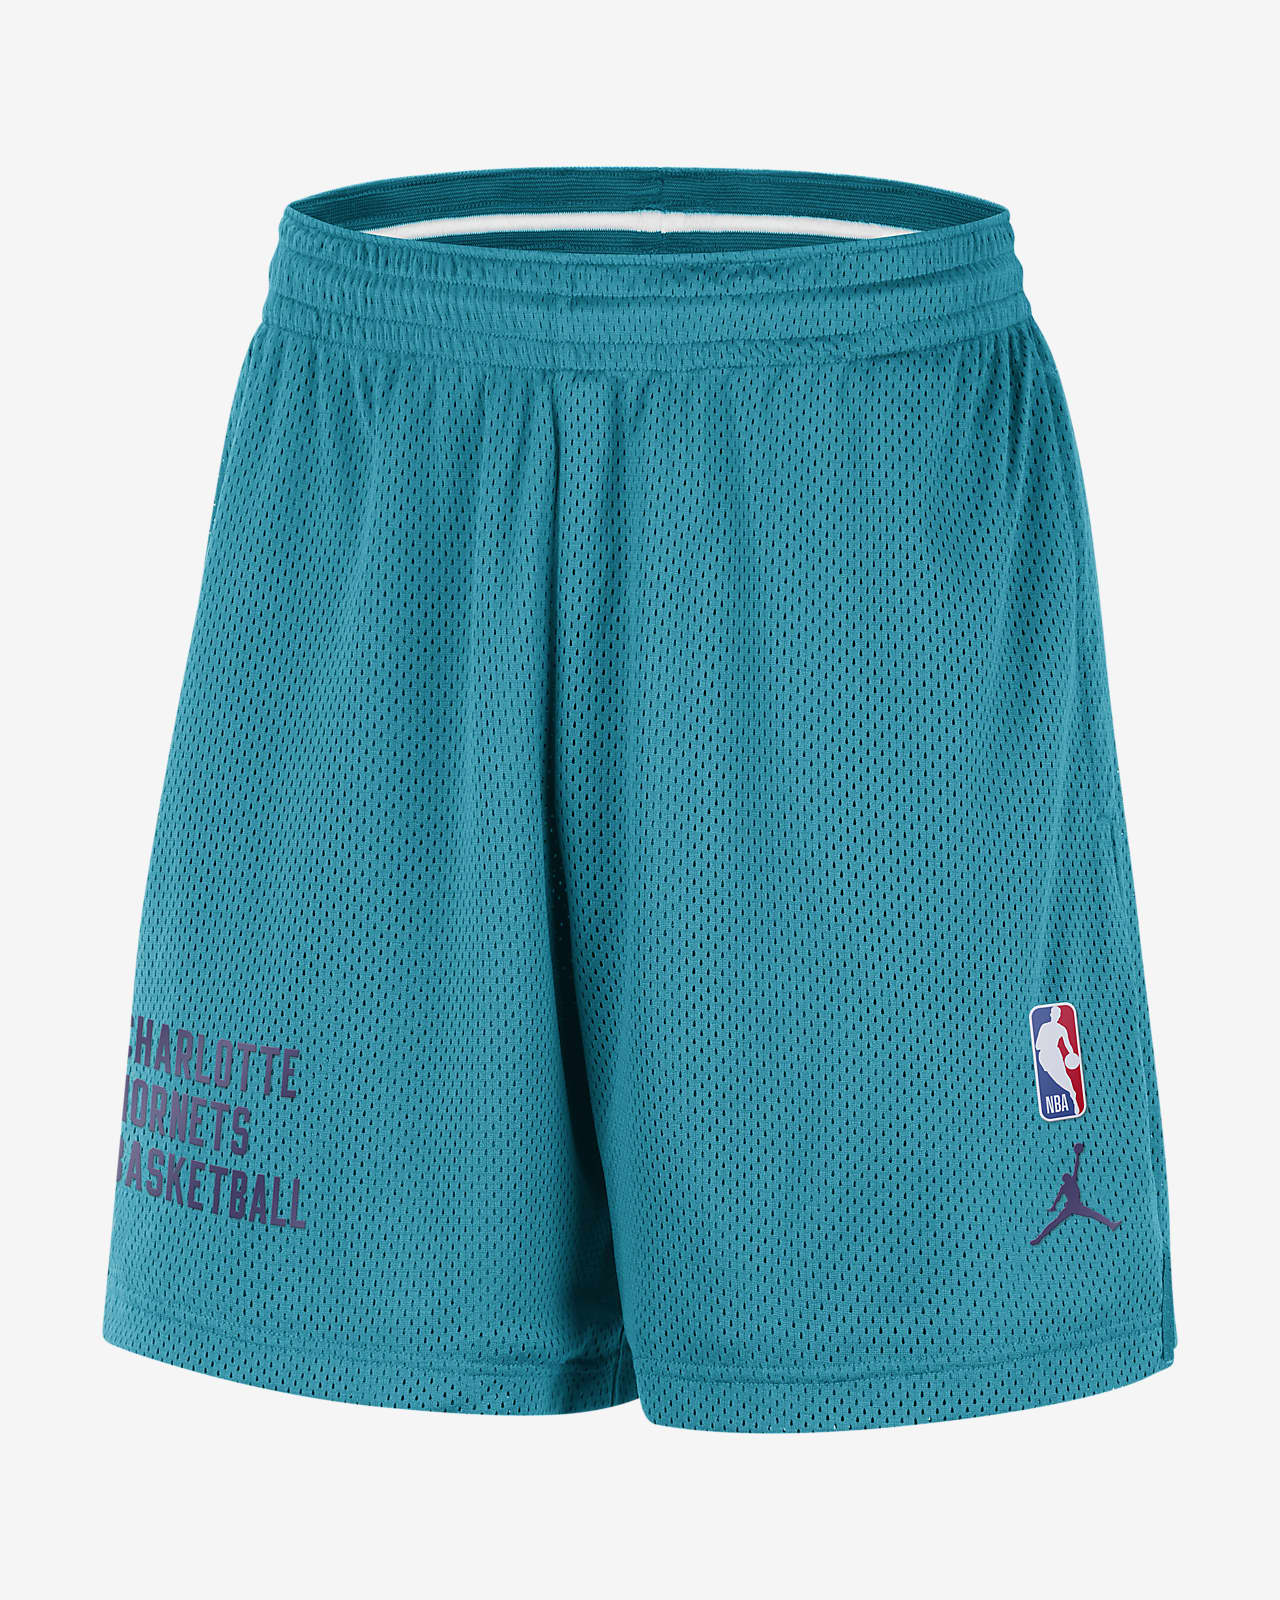 Charlotte Hornets Shorts 